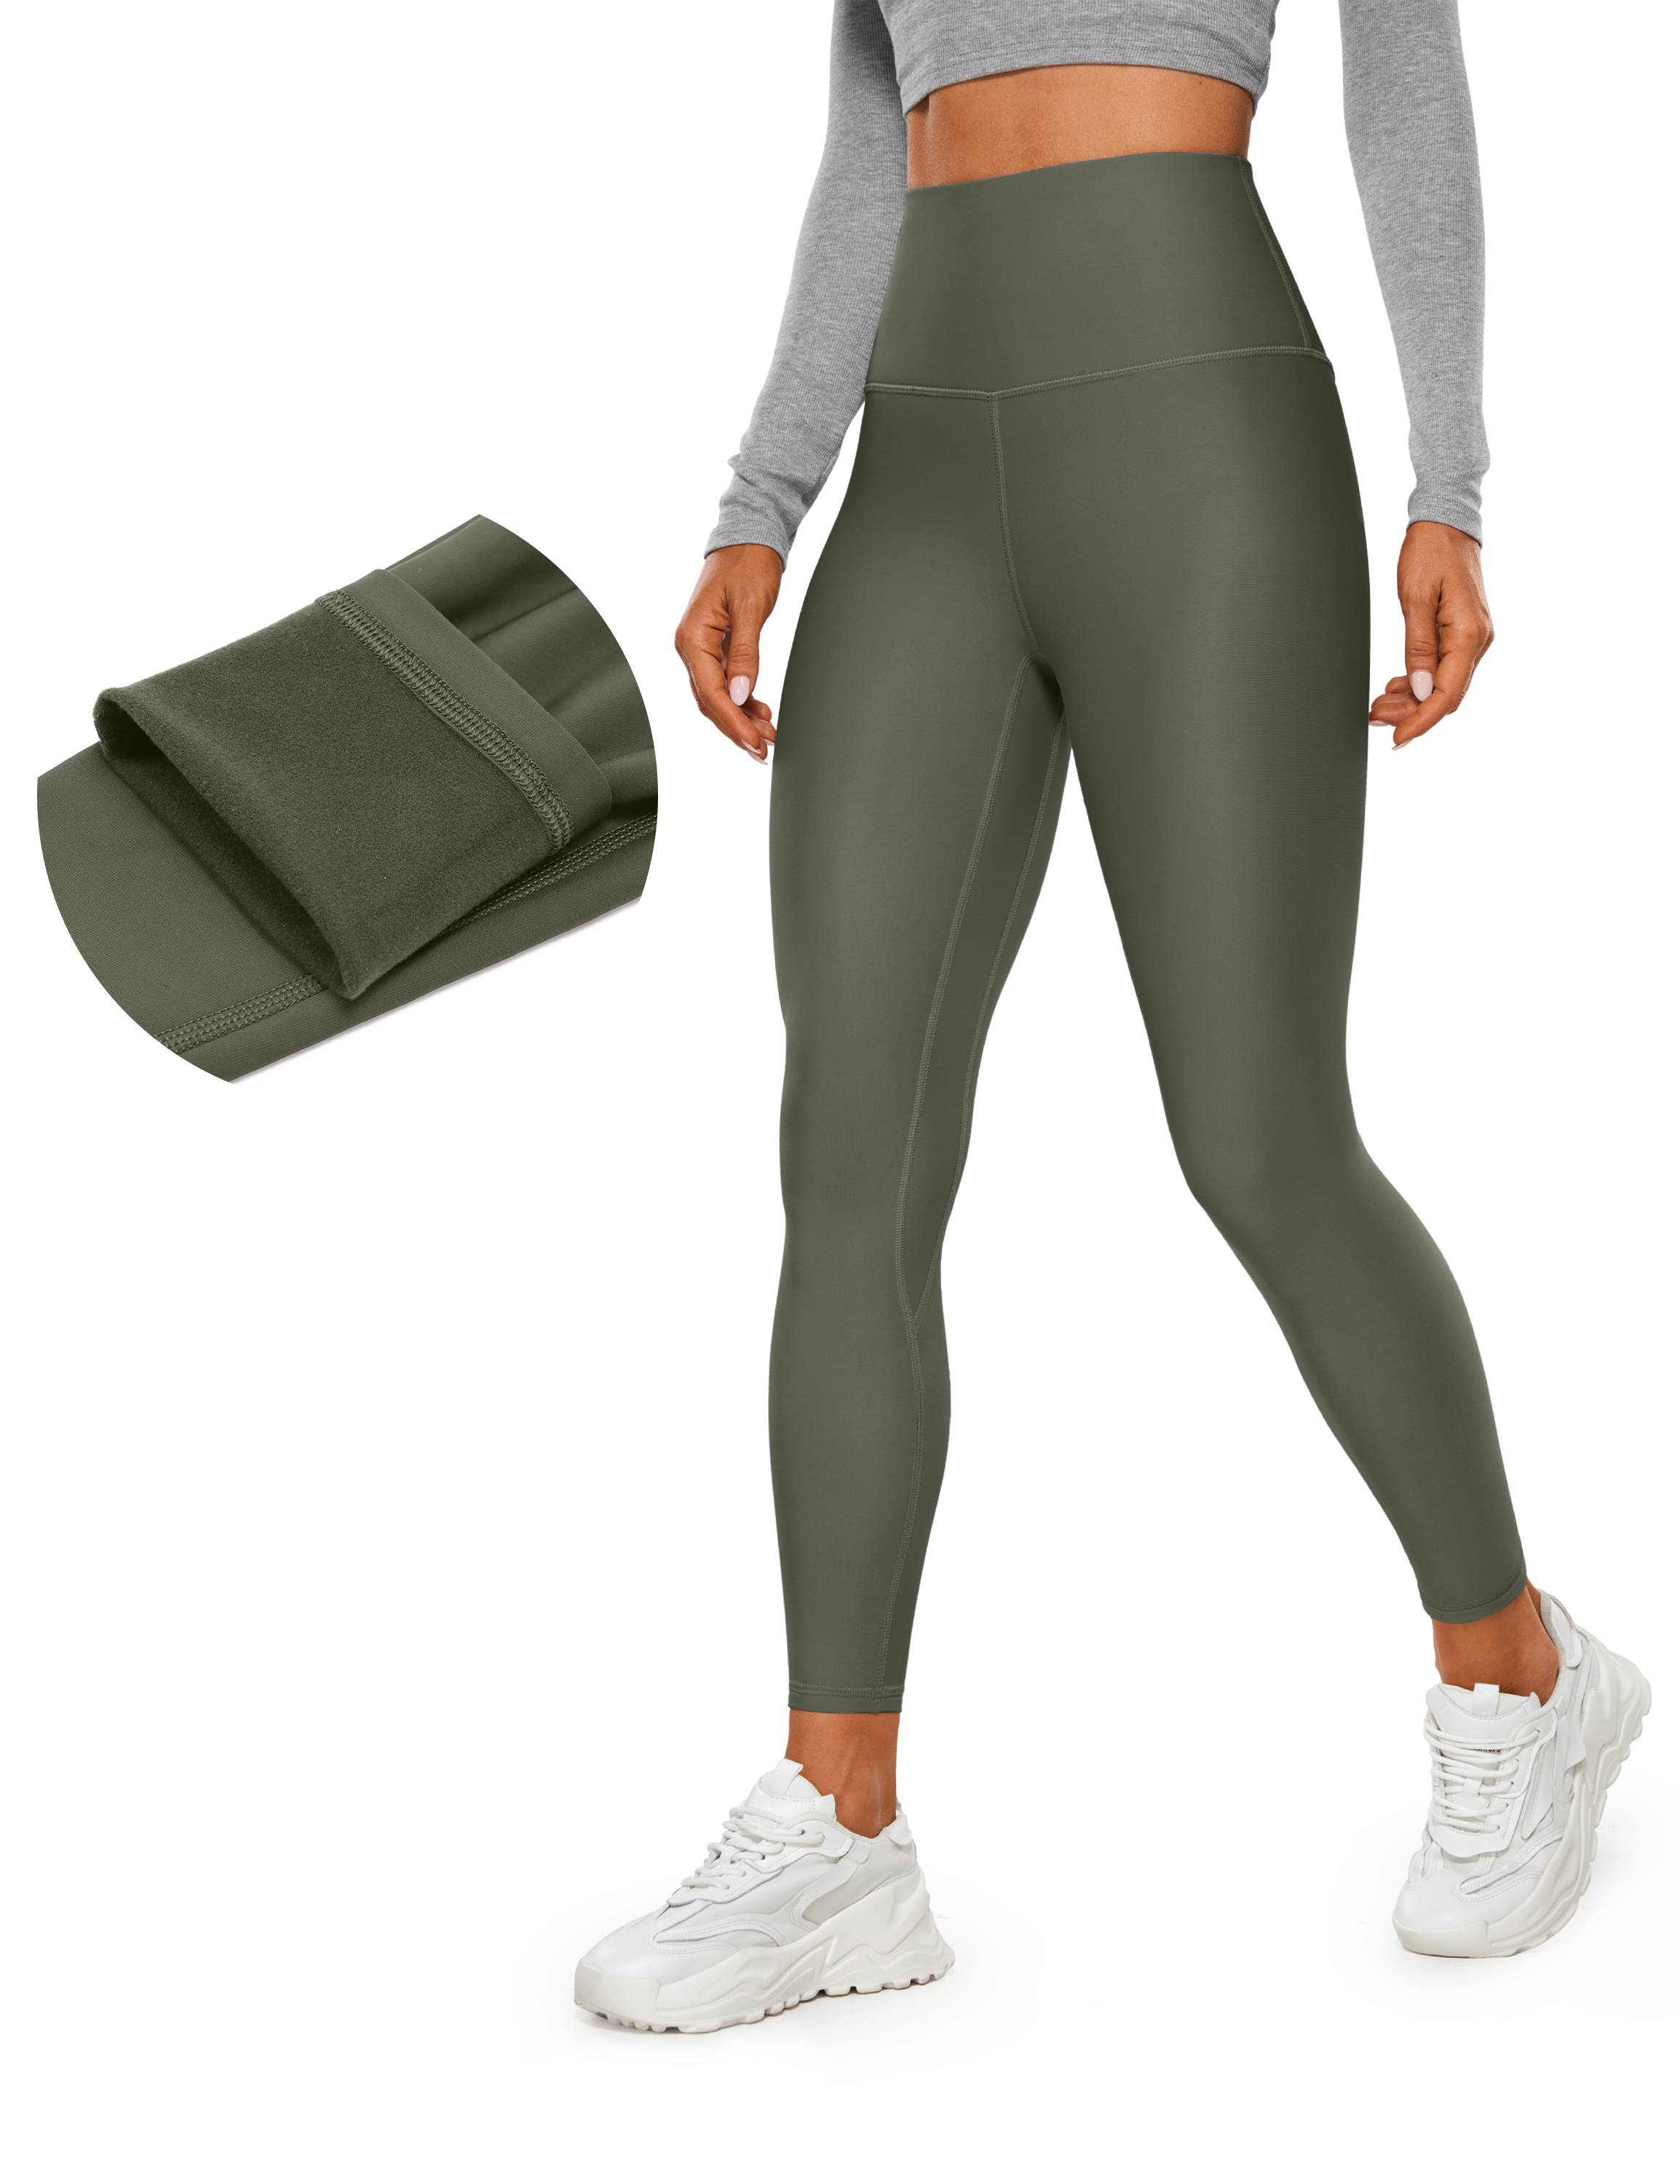 Crz Yoga Women's High Waisted Workout Pants 7/8 Yoga Leggings With